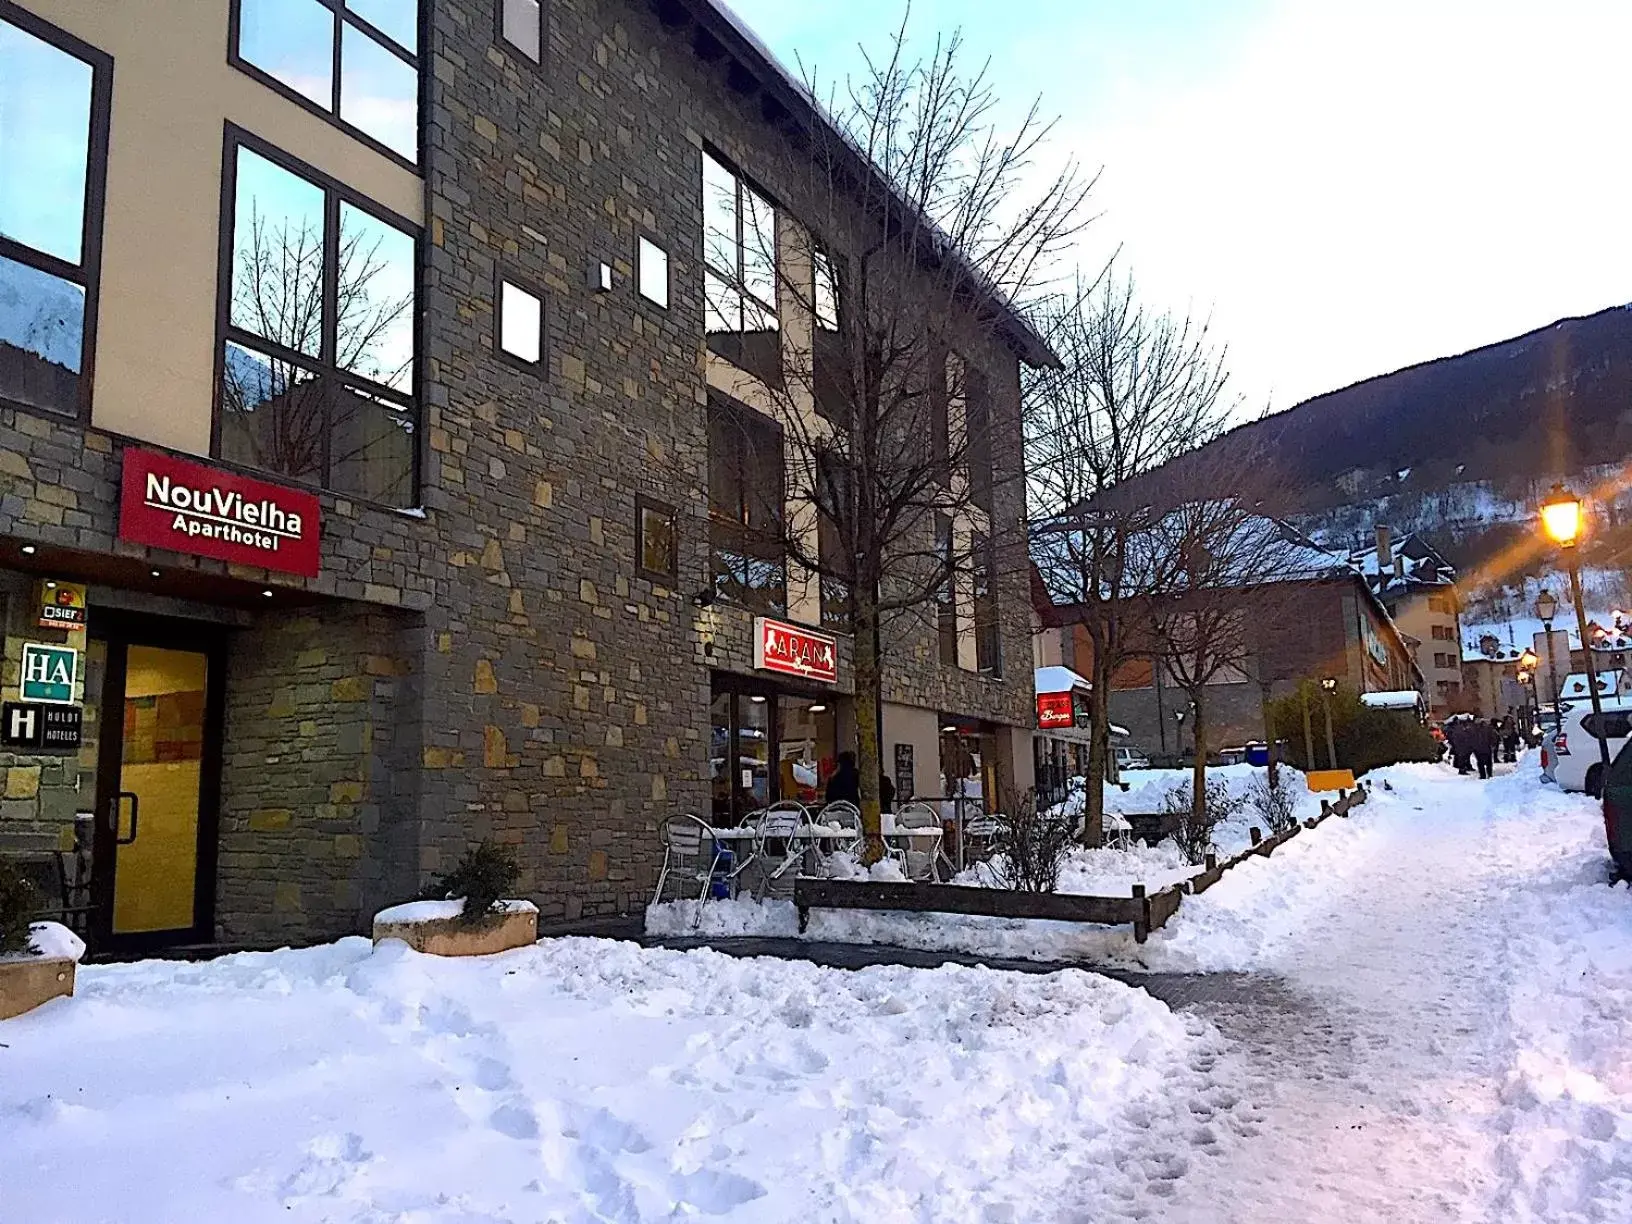 Restaurant/places to eat, Winter in Aparthotel Nou Vielha